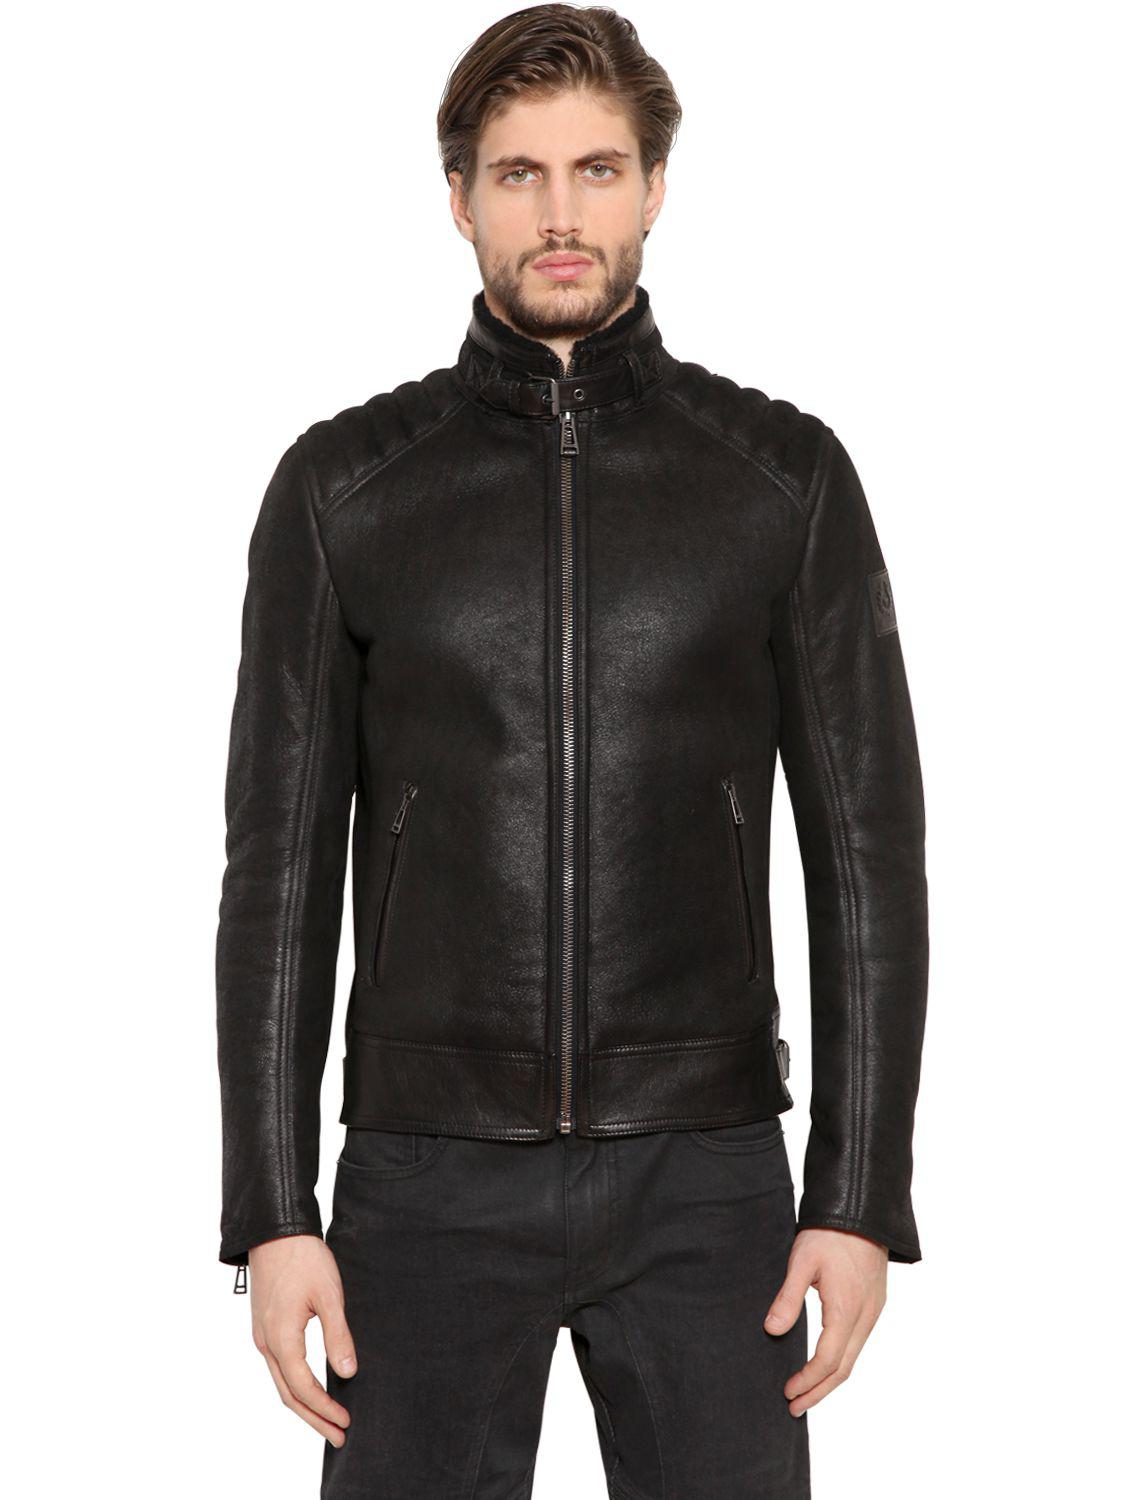 Belstaff Westlake Shearling Leather Jacket in Black for Men - Lyst